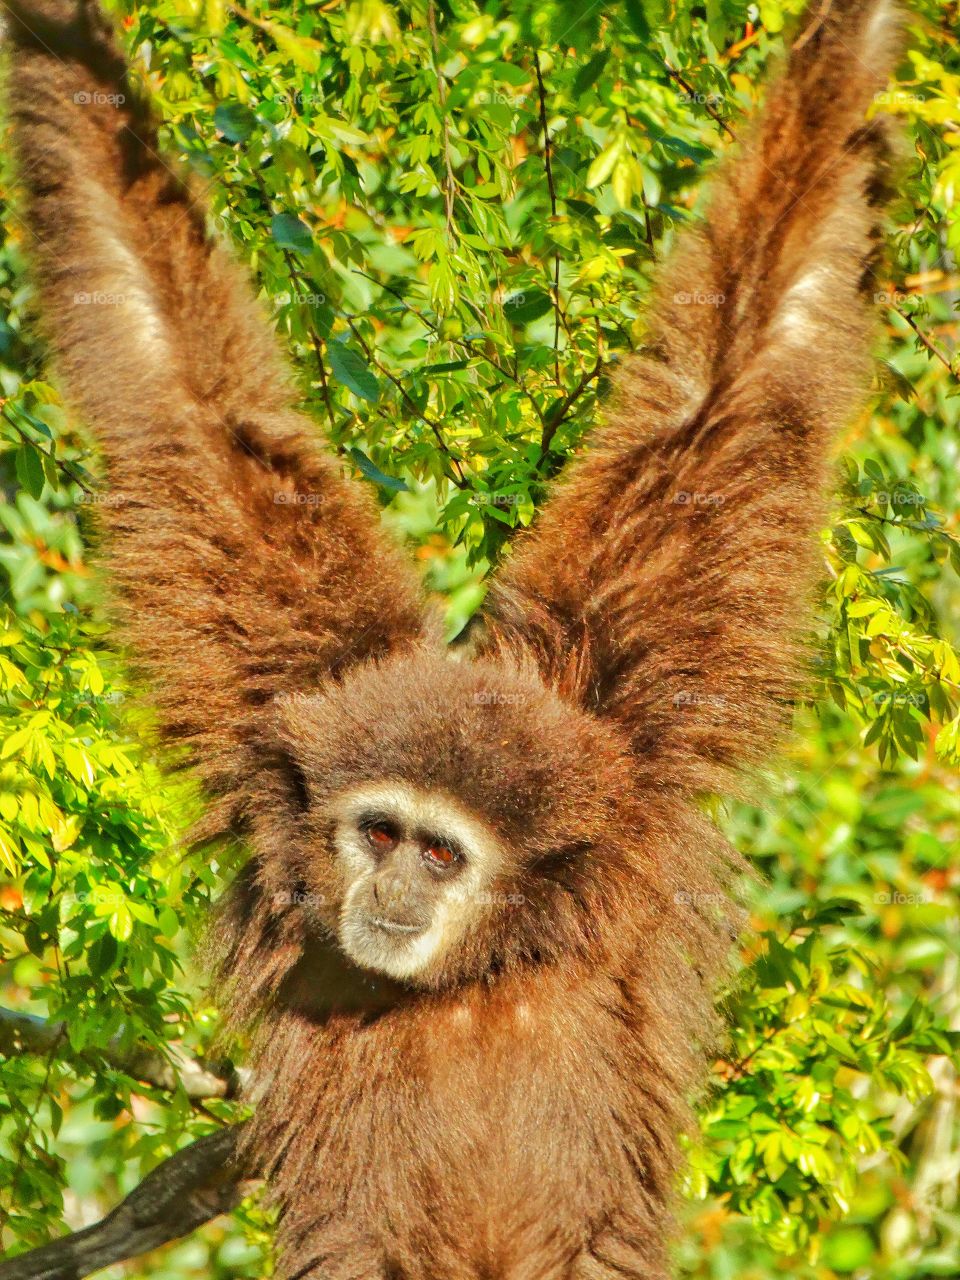 Gibbon Swinging Through Trees
